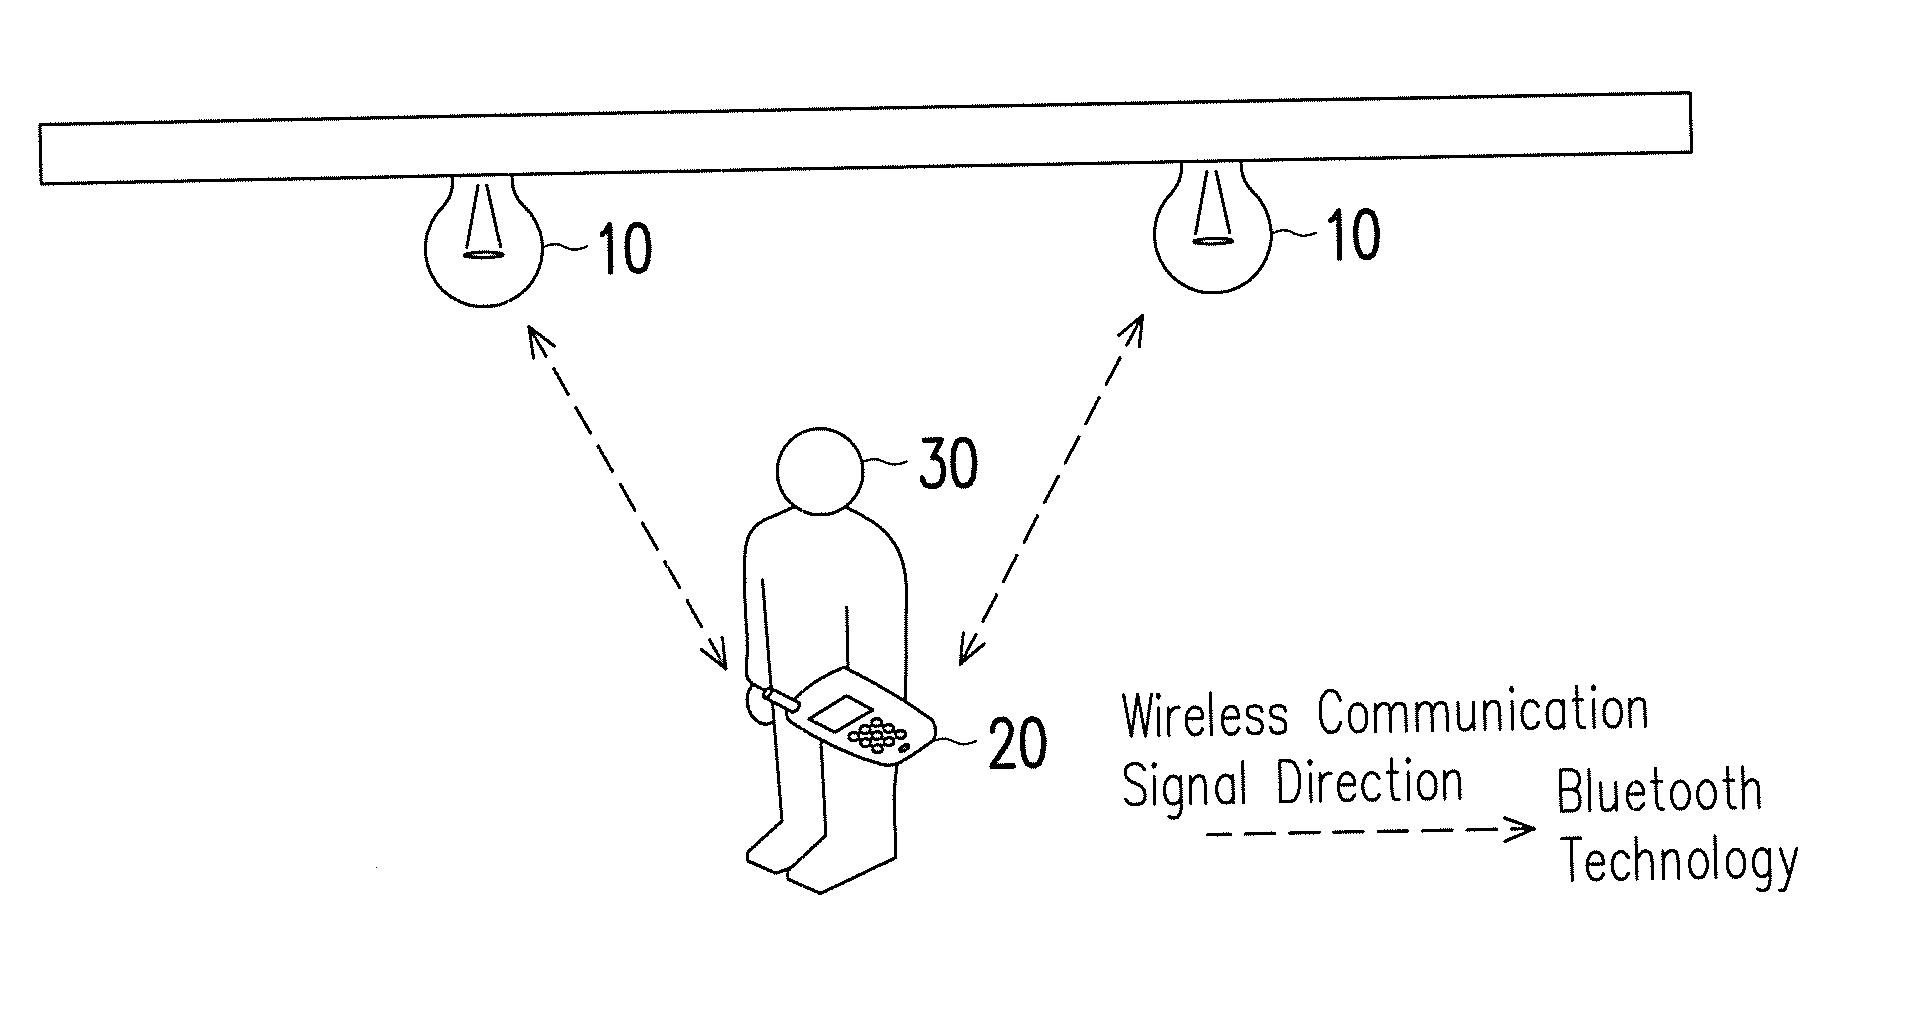 Illumination control system